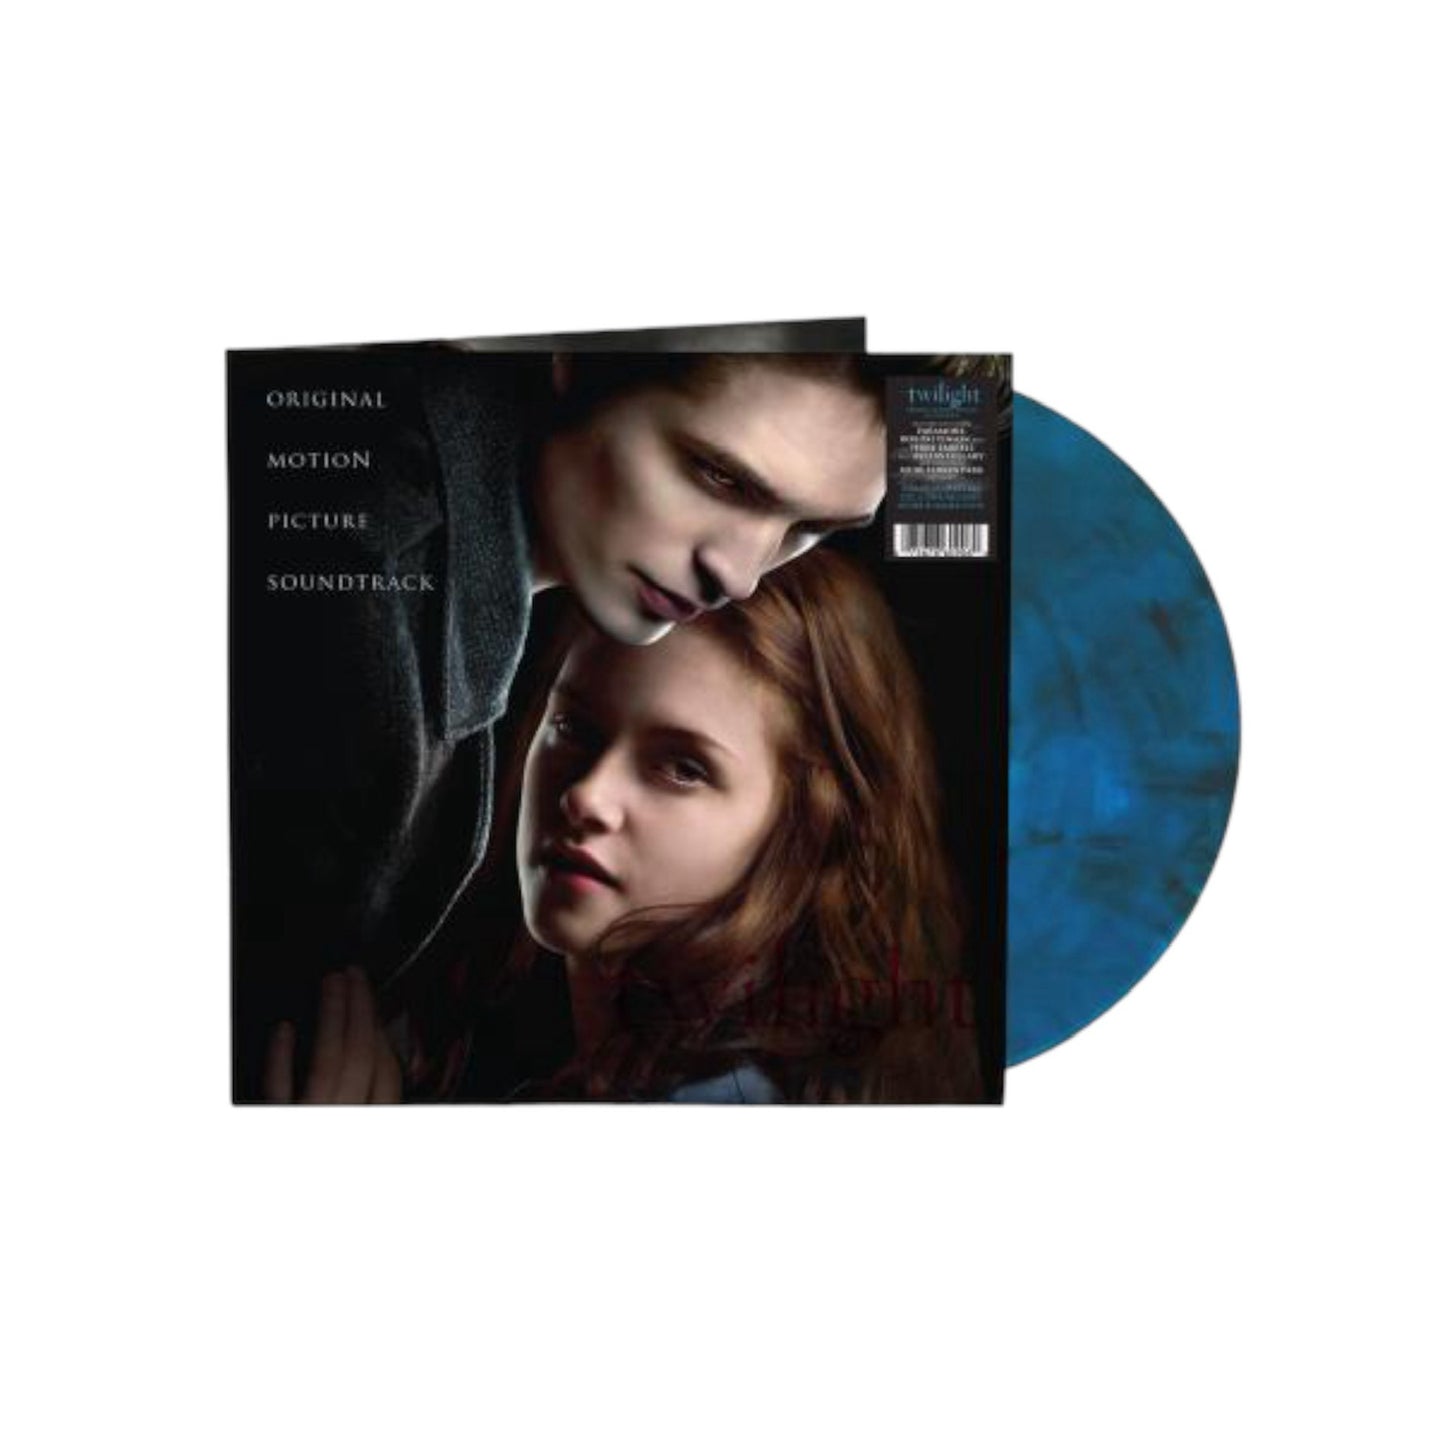 Twilight Soundtrack LP Vinyl Record